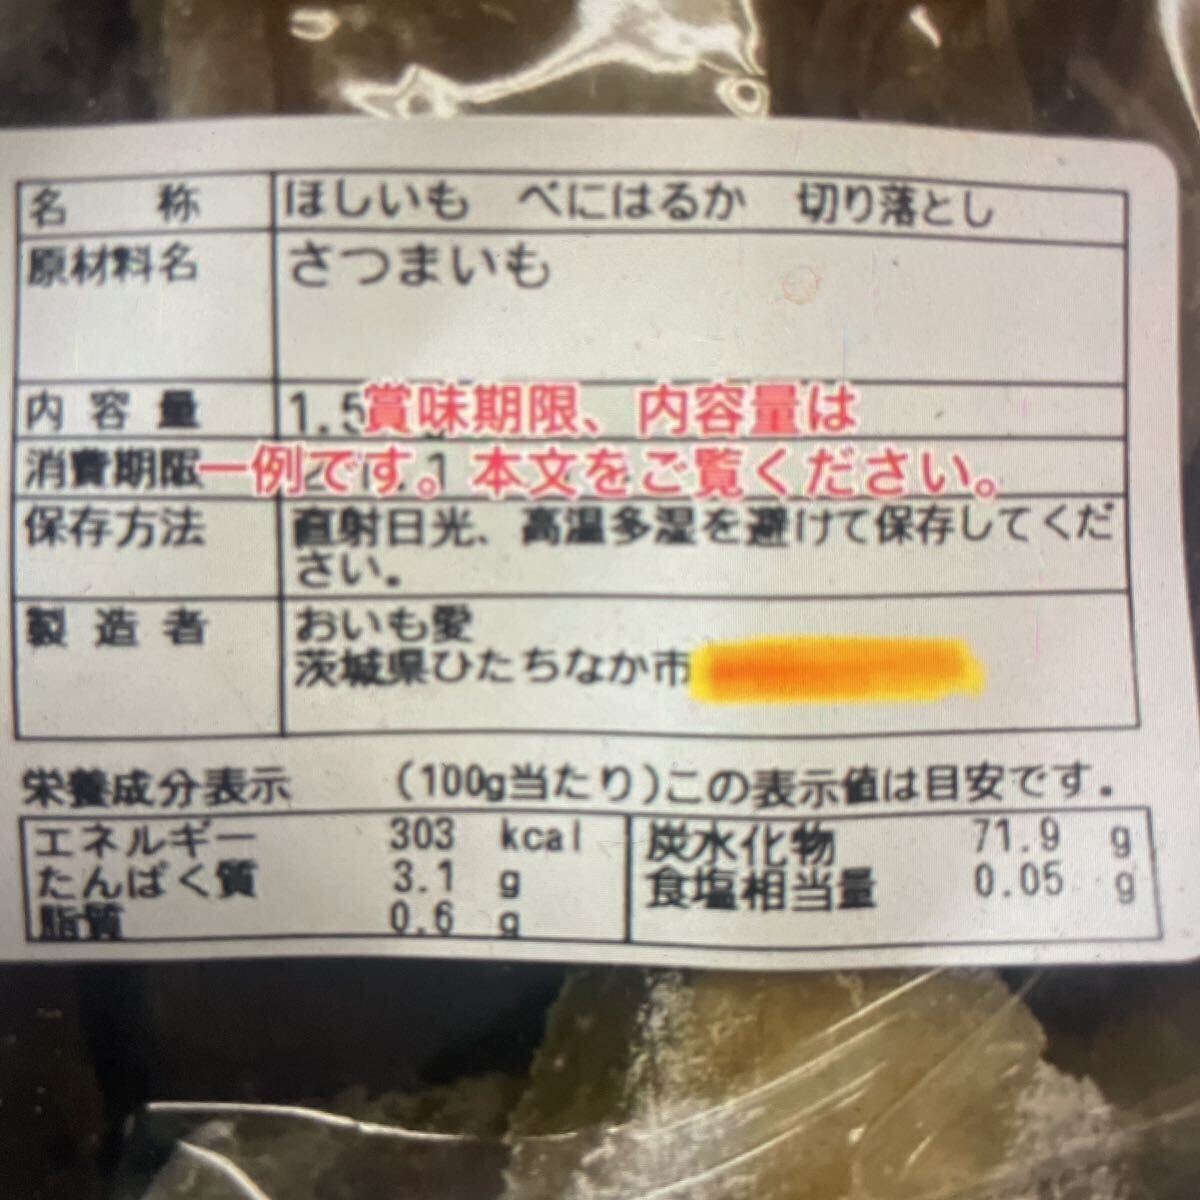  limitation! profitable home use .... Ibaraki ..... production ... - ..1.2 kilo home use dried .. dry corm limited amount zx